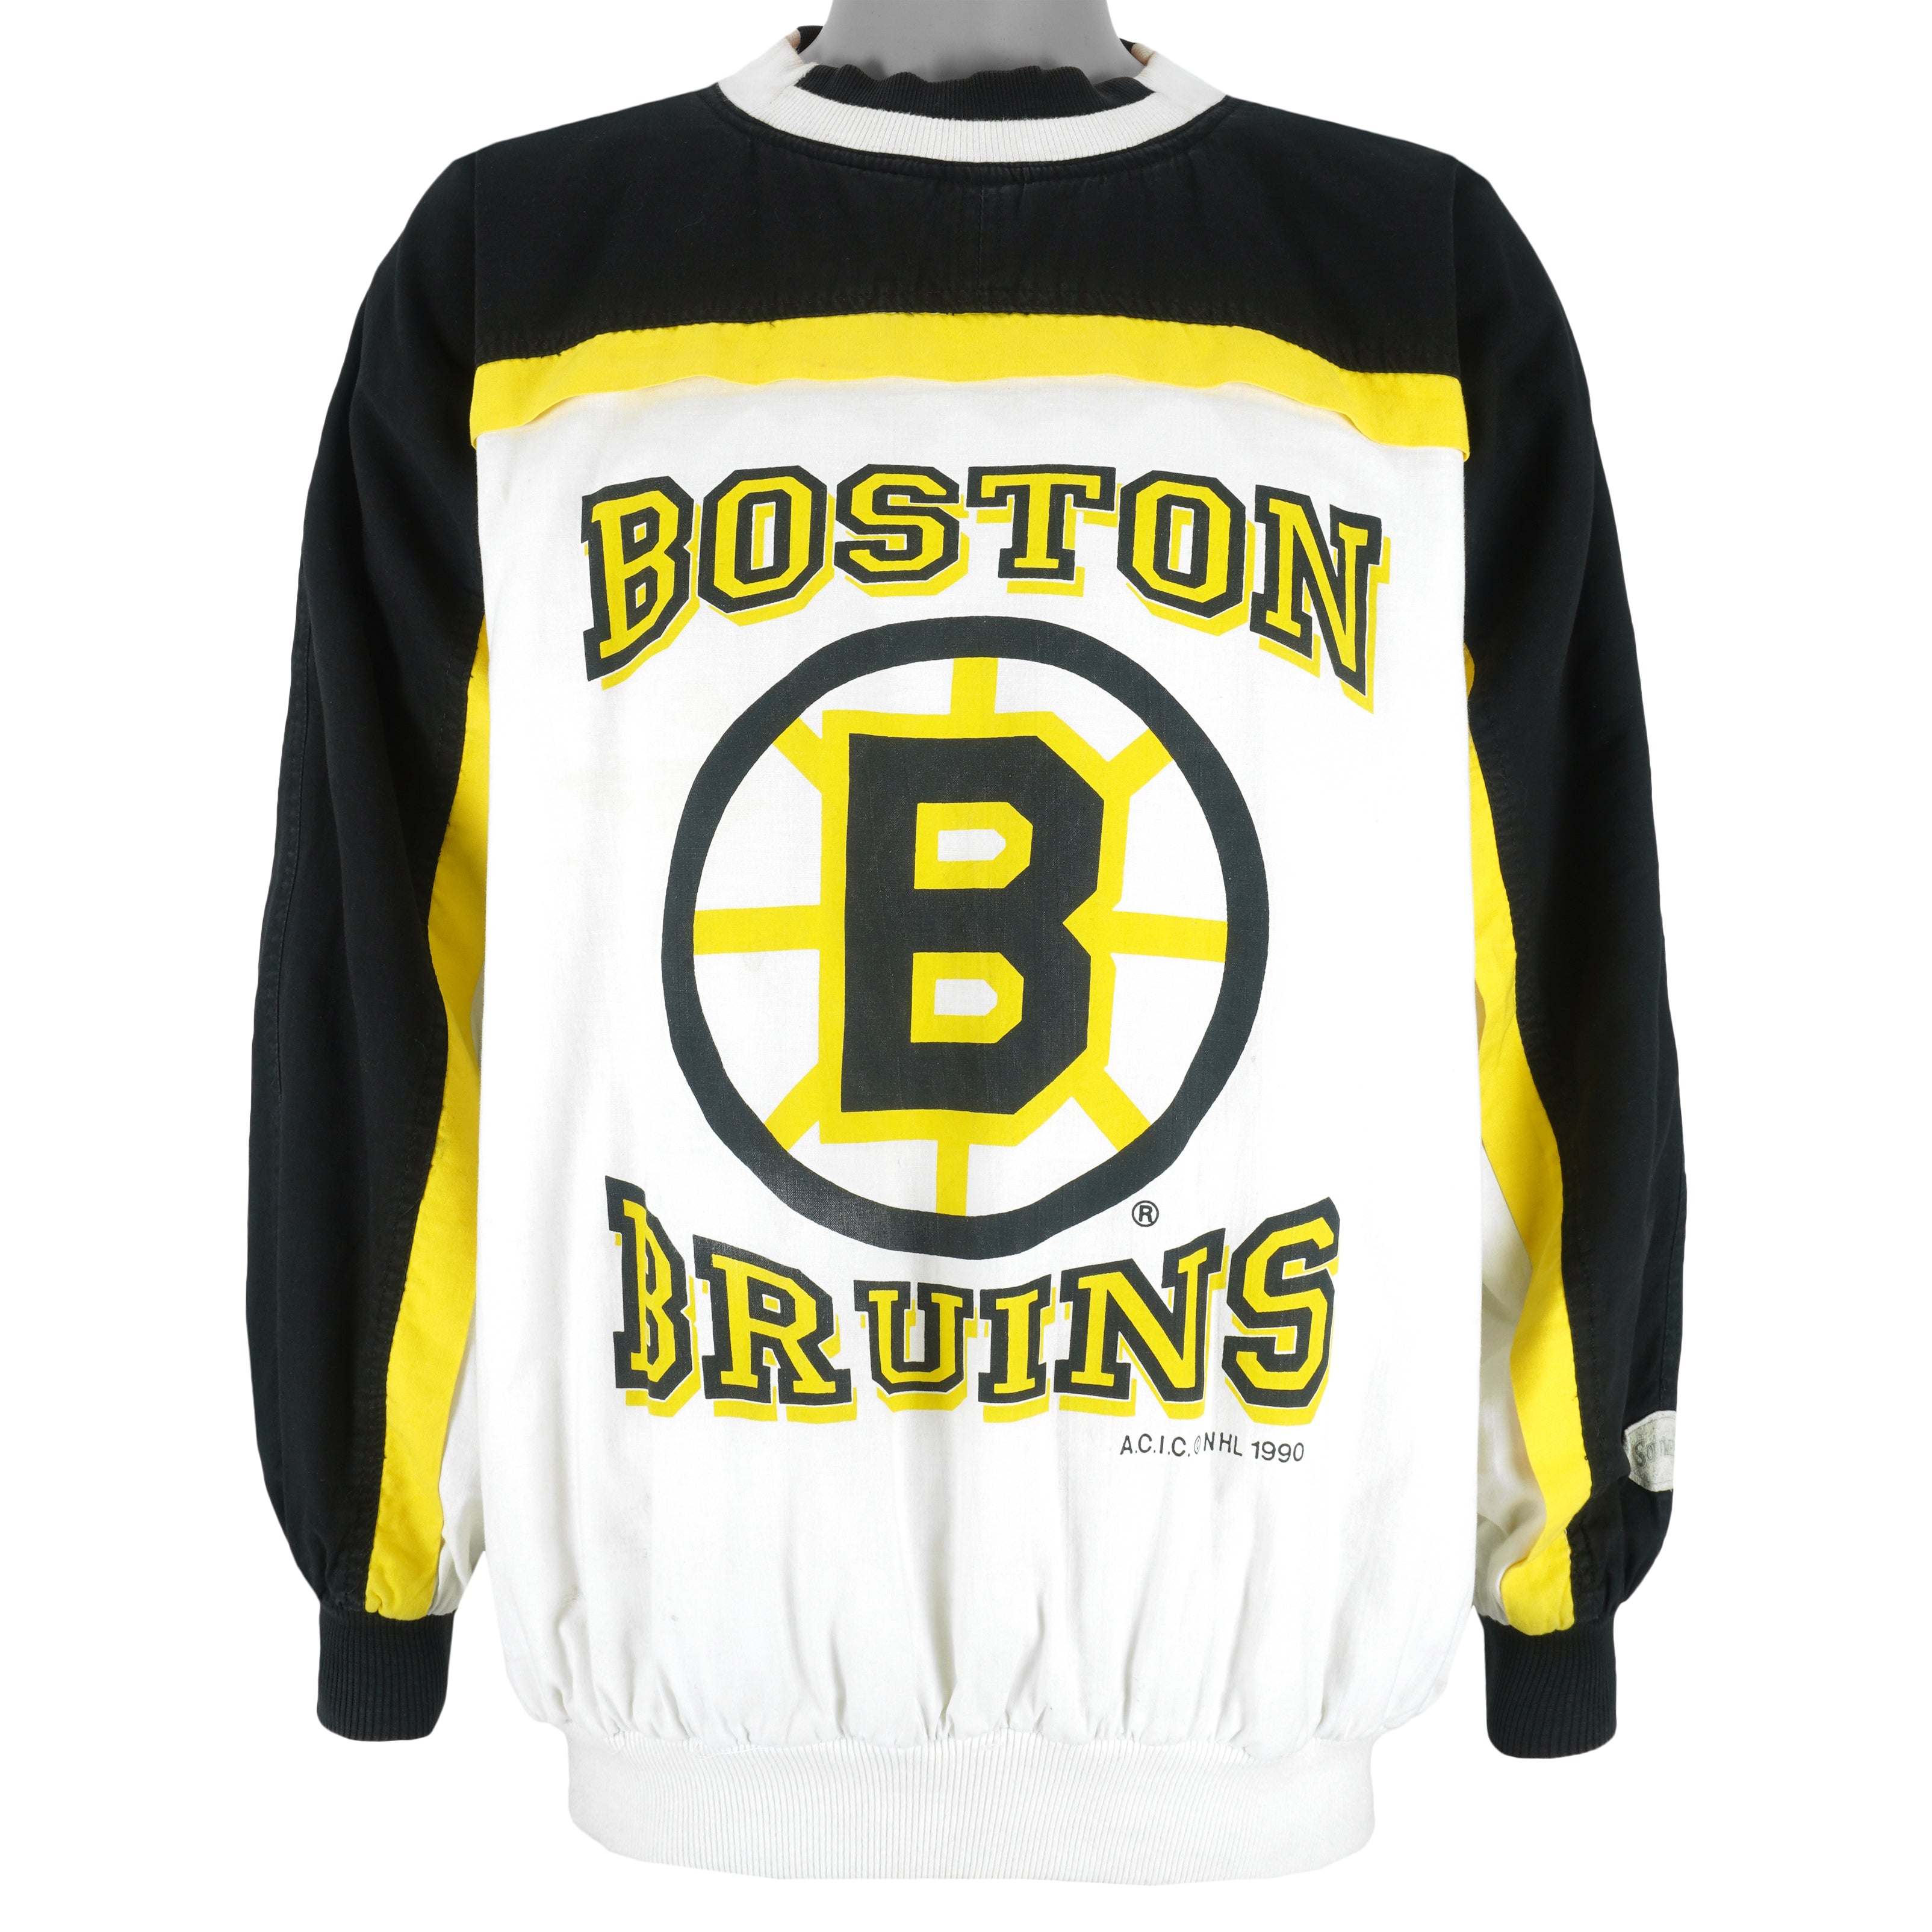 Lee Boston Bruins Crewneck